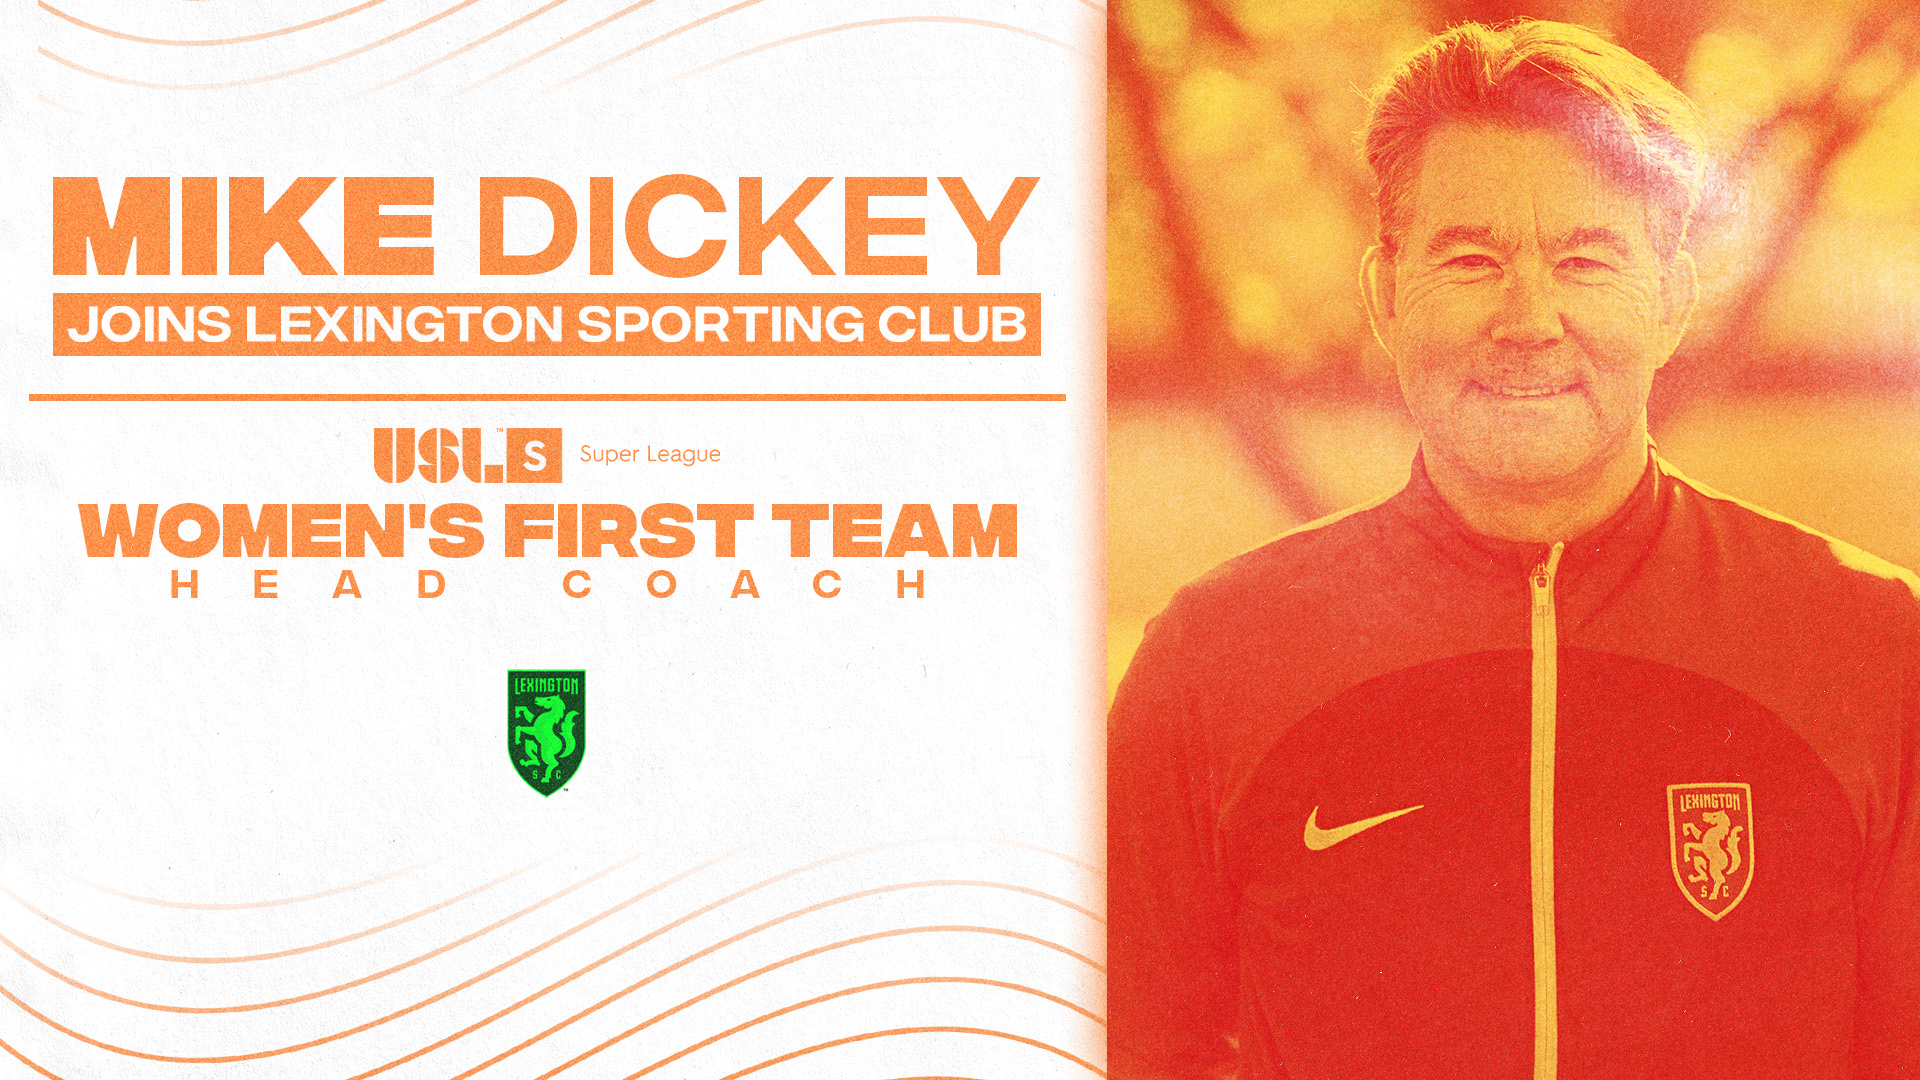 Lexington Sporting Club appoints Michael Dickey as Super League Head Coach ahead of inaugural season featured image